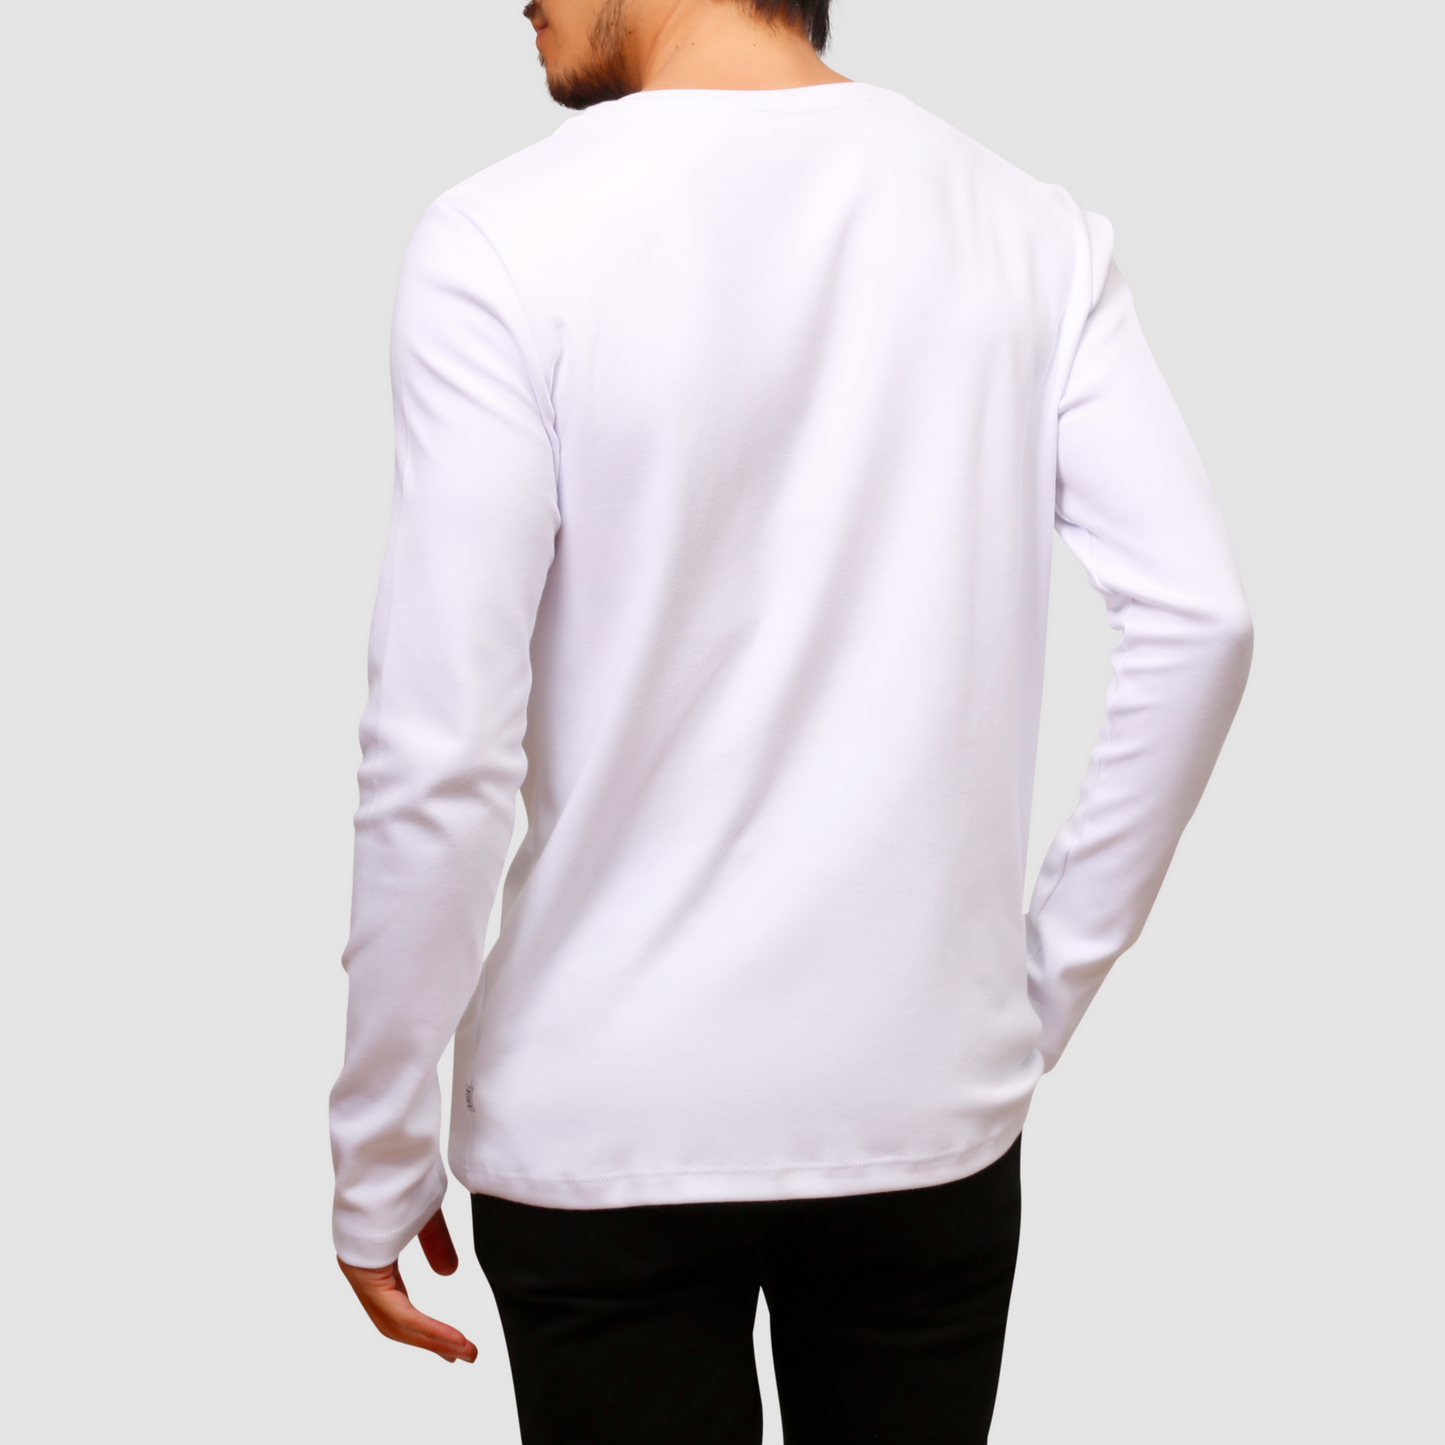 ORIBA | Camiseta Malha Dupla Gola C Manga Longa Branca Costas